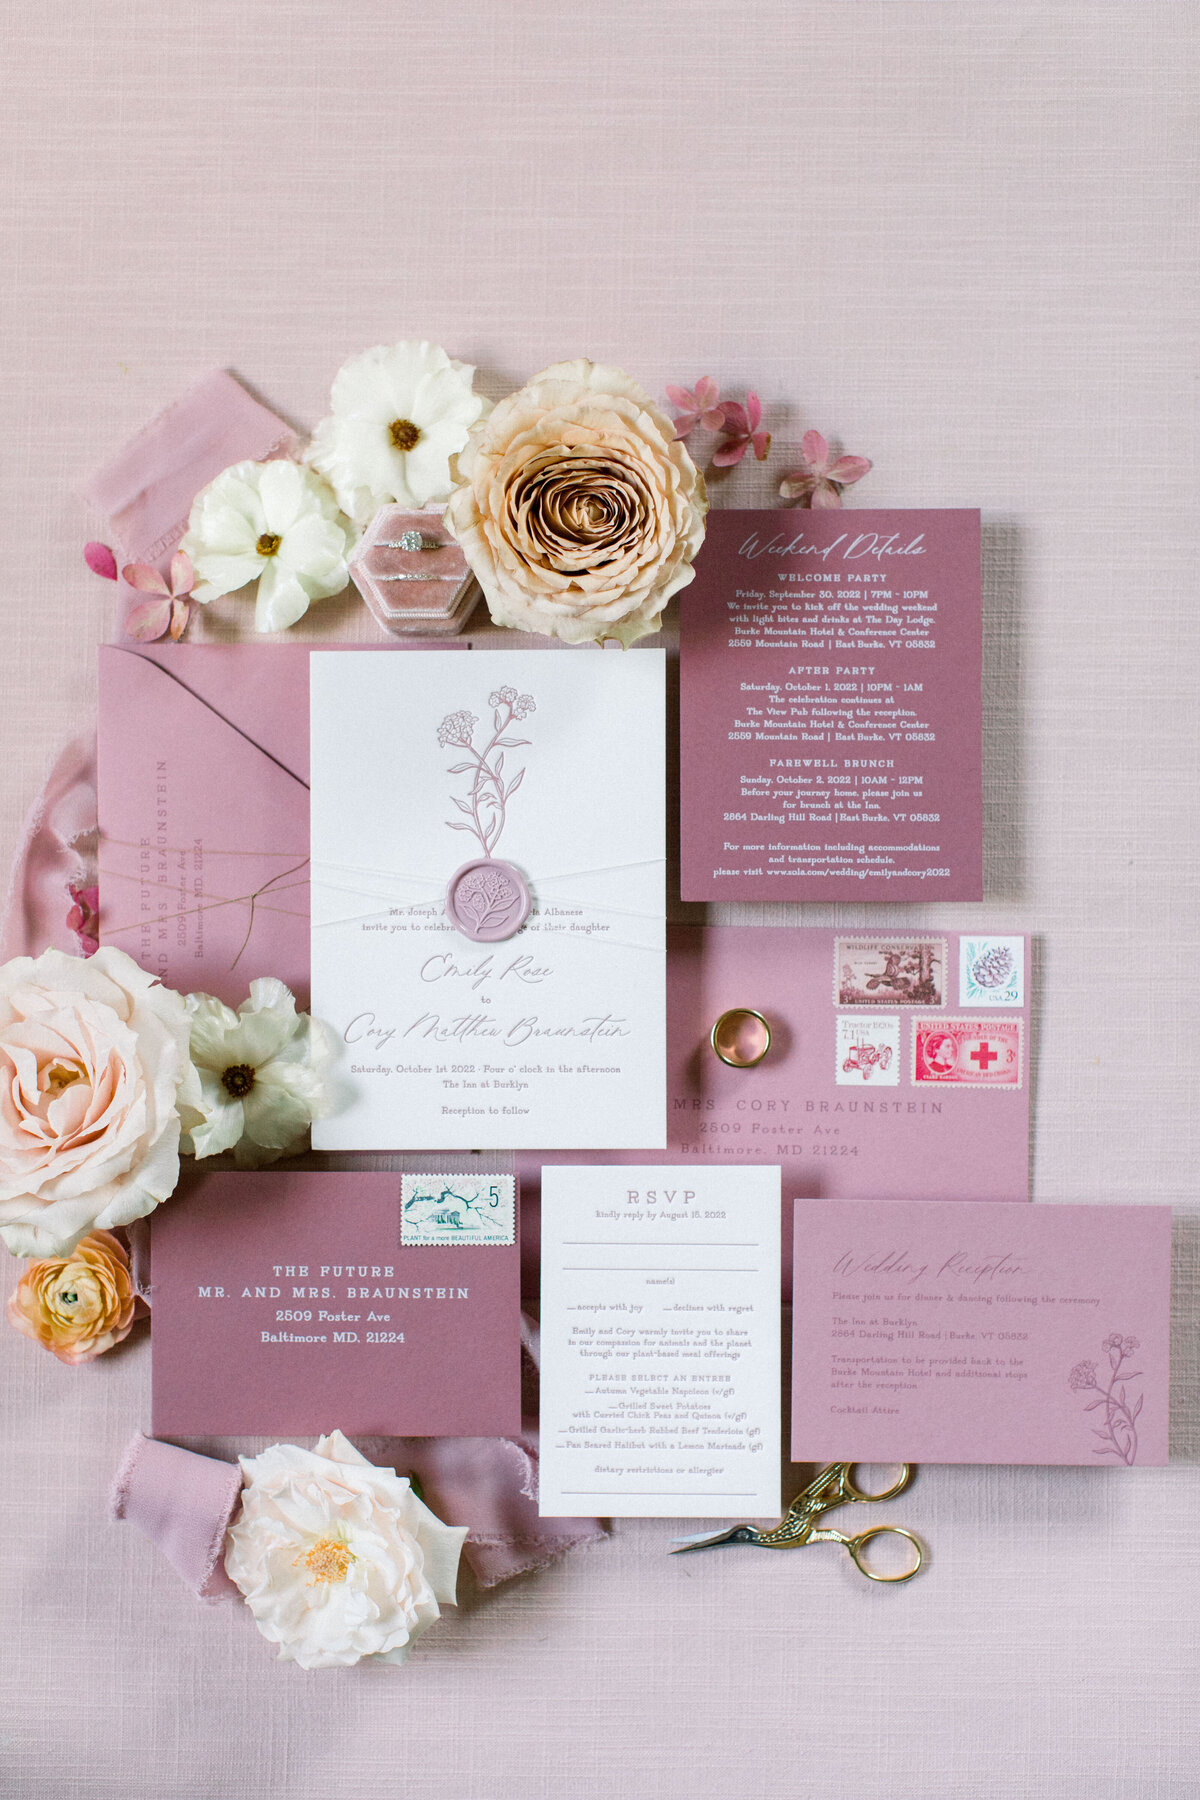 Blush and rose wedding invitations